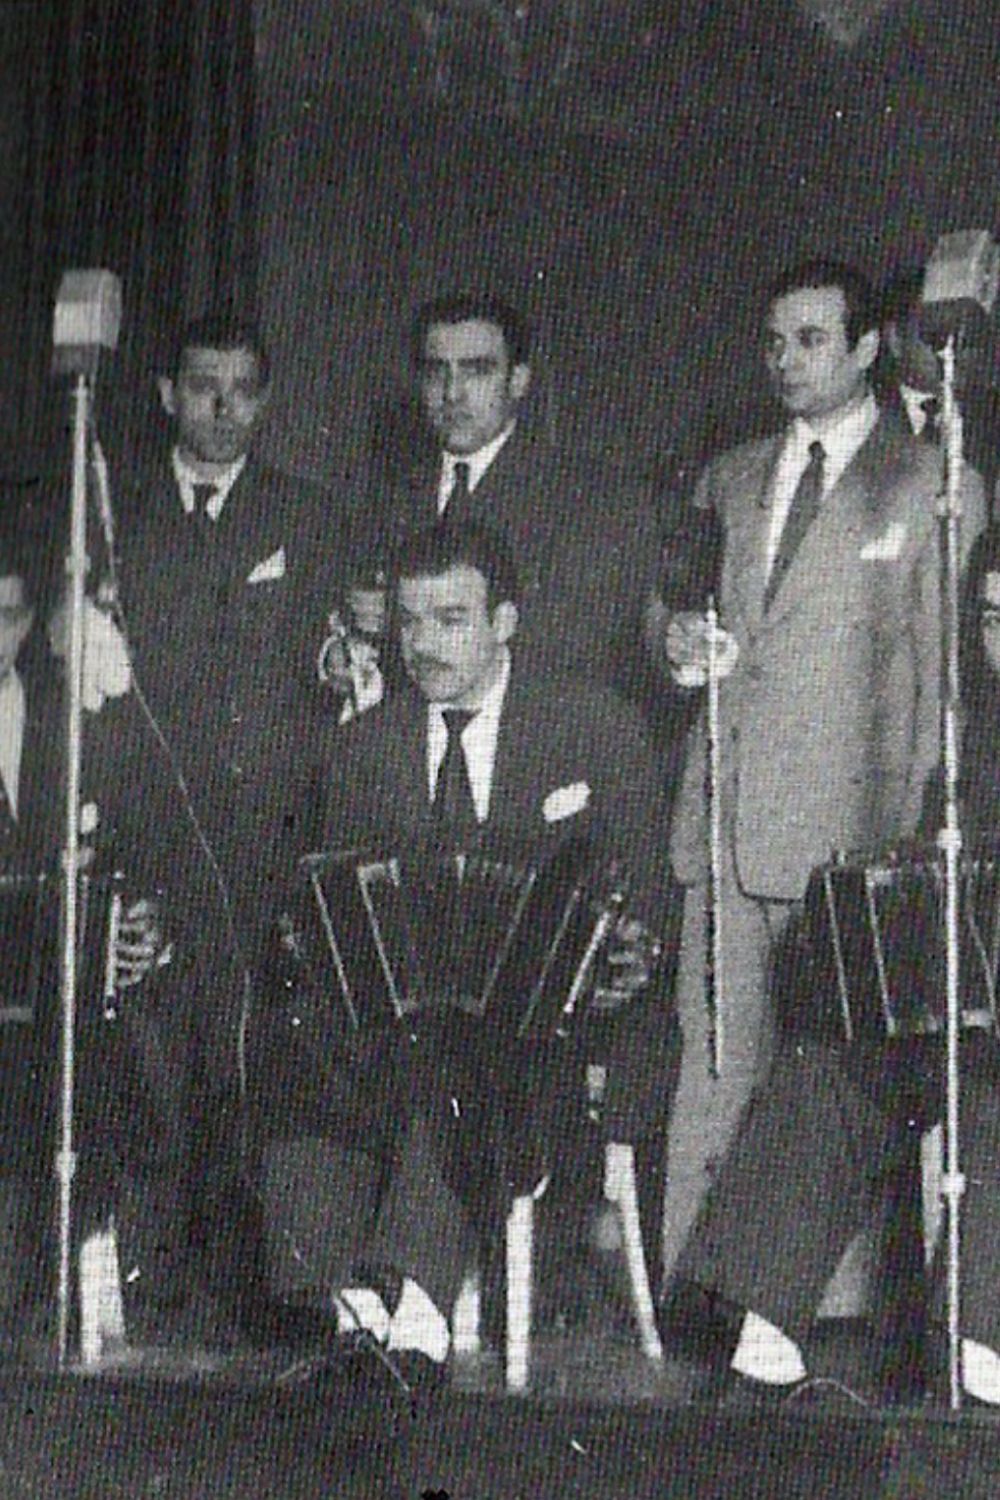 Mario Demarco, Argentine Tango musician and composer.